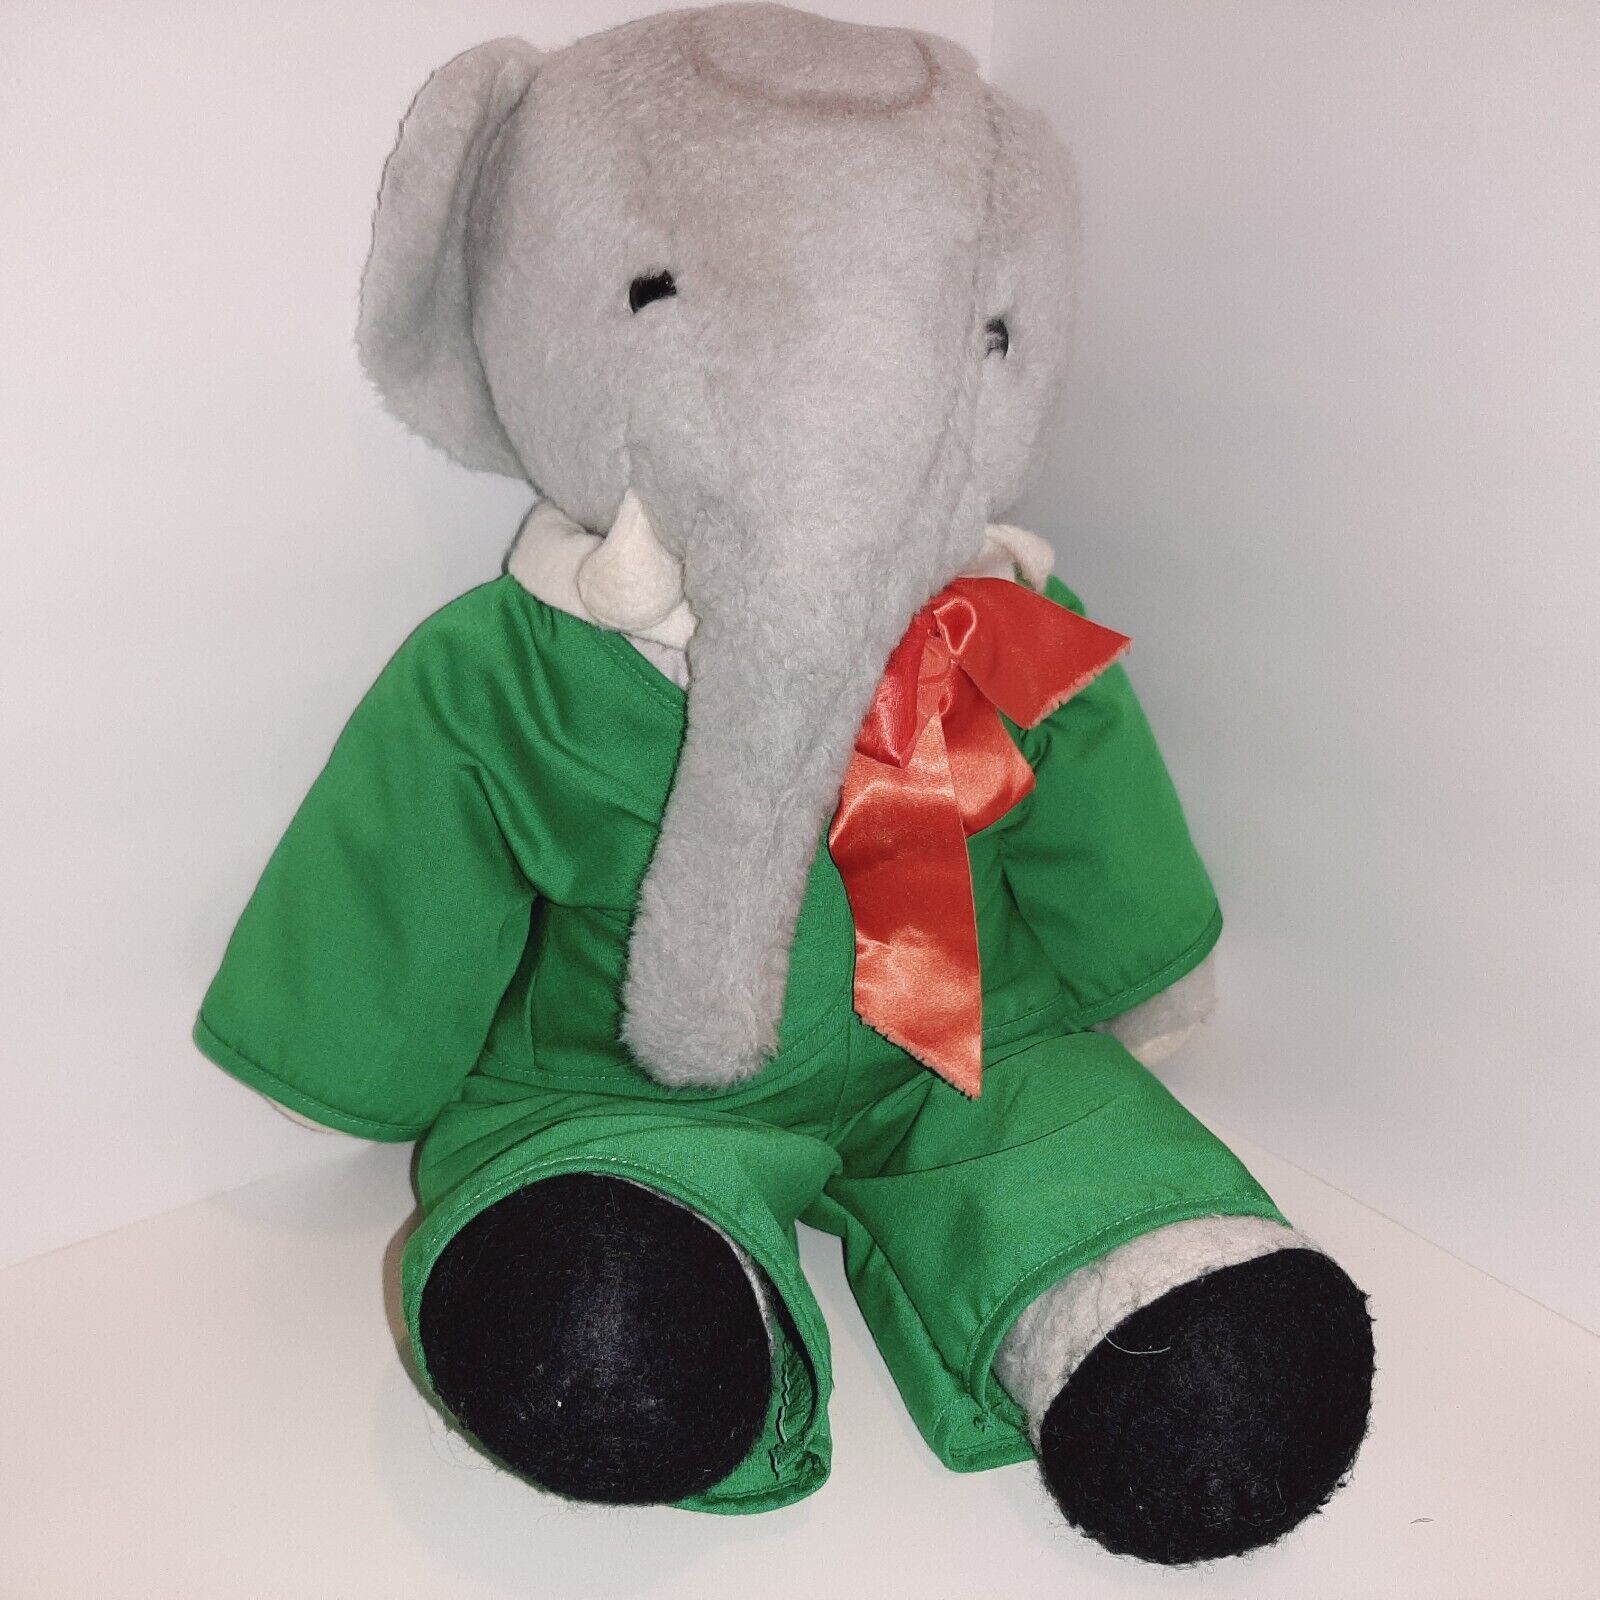 Babar The Elephant 19" Plush Vintage EDEN 1977 w/o Crown Stuffed Animal - $14.85